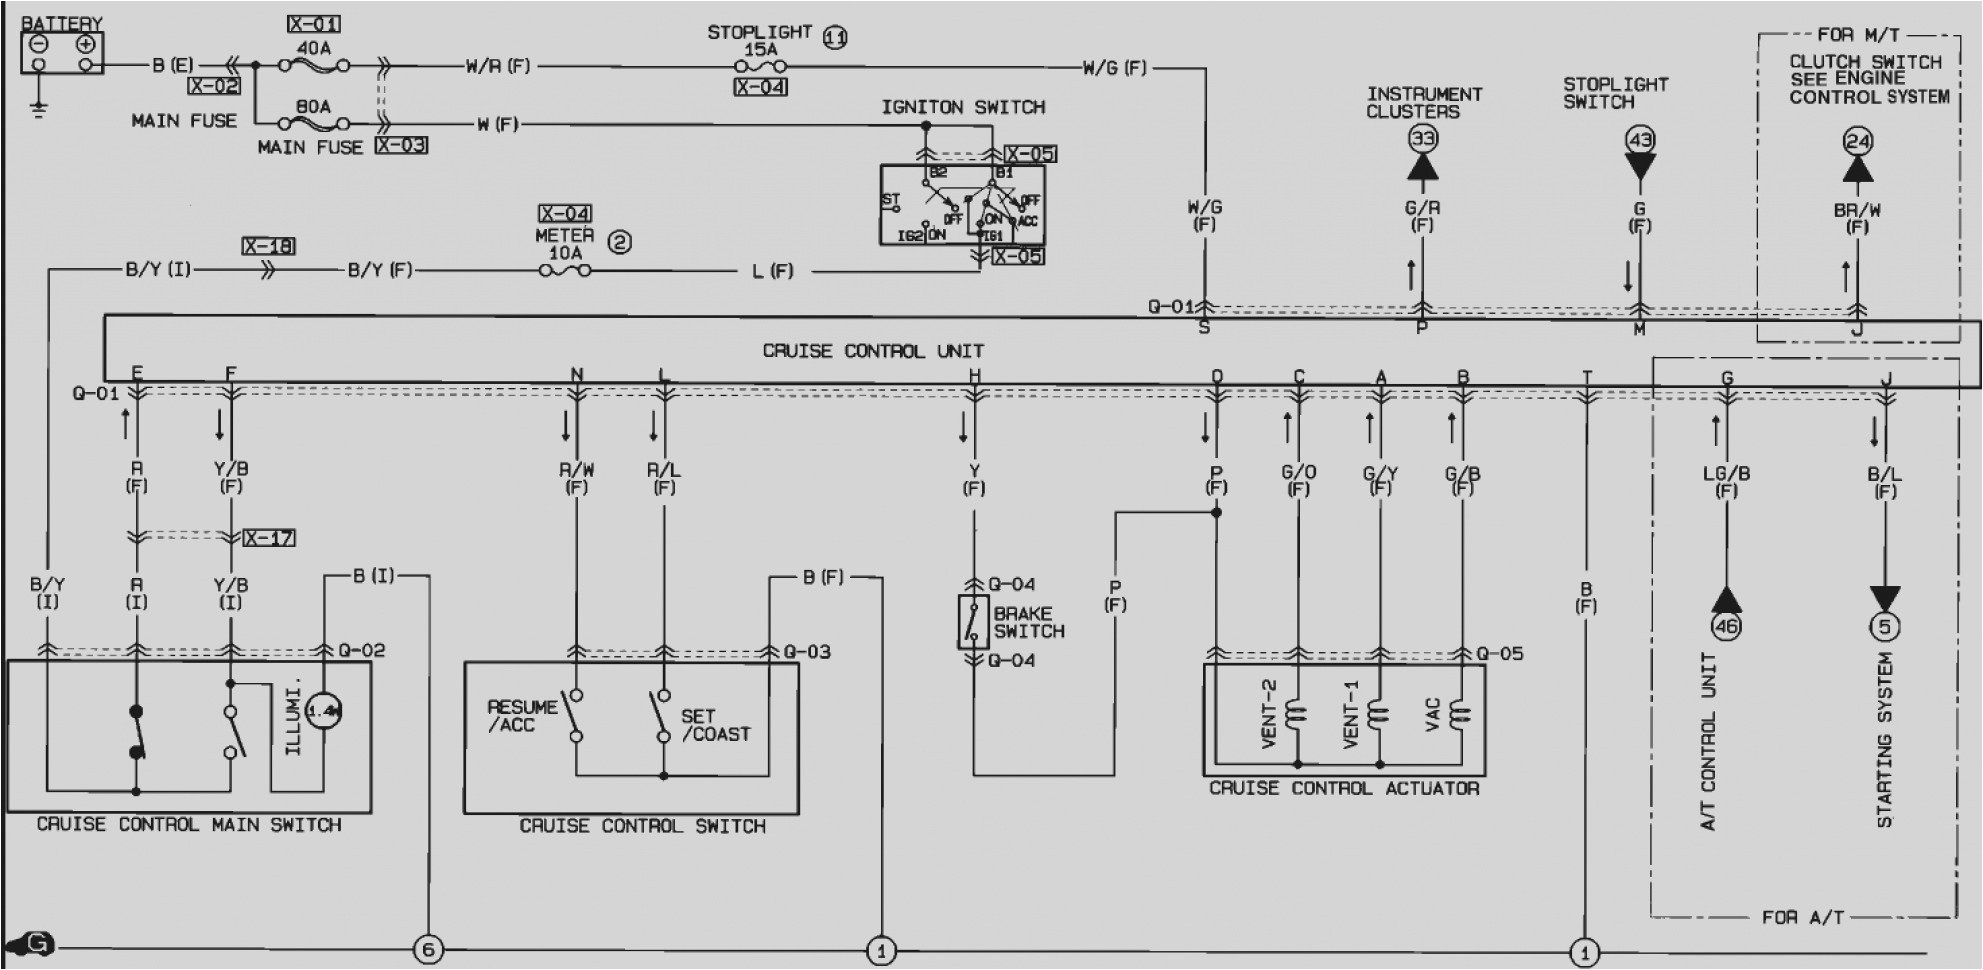 miata wiring harness diagram wiring diagrams konsult na mx5 wiring diagram na miata wiring diagram share